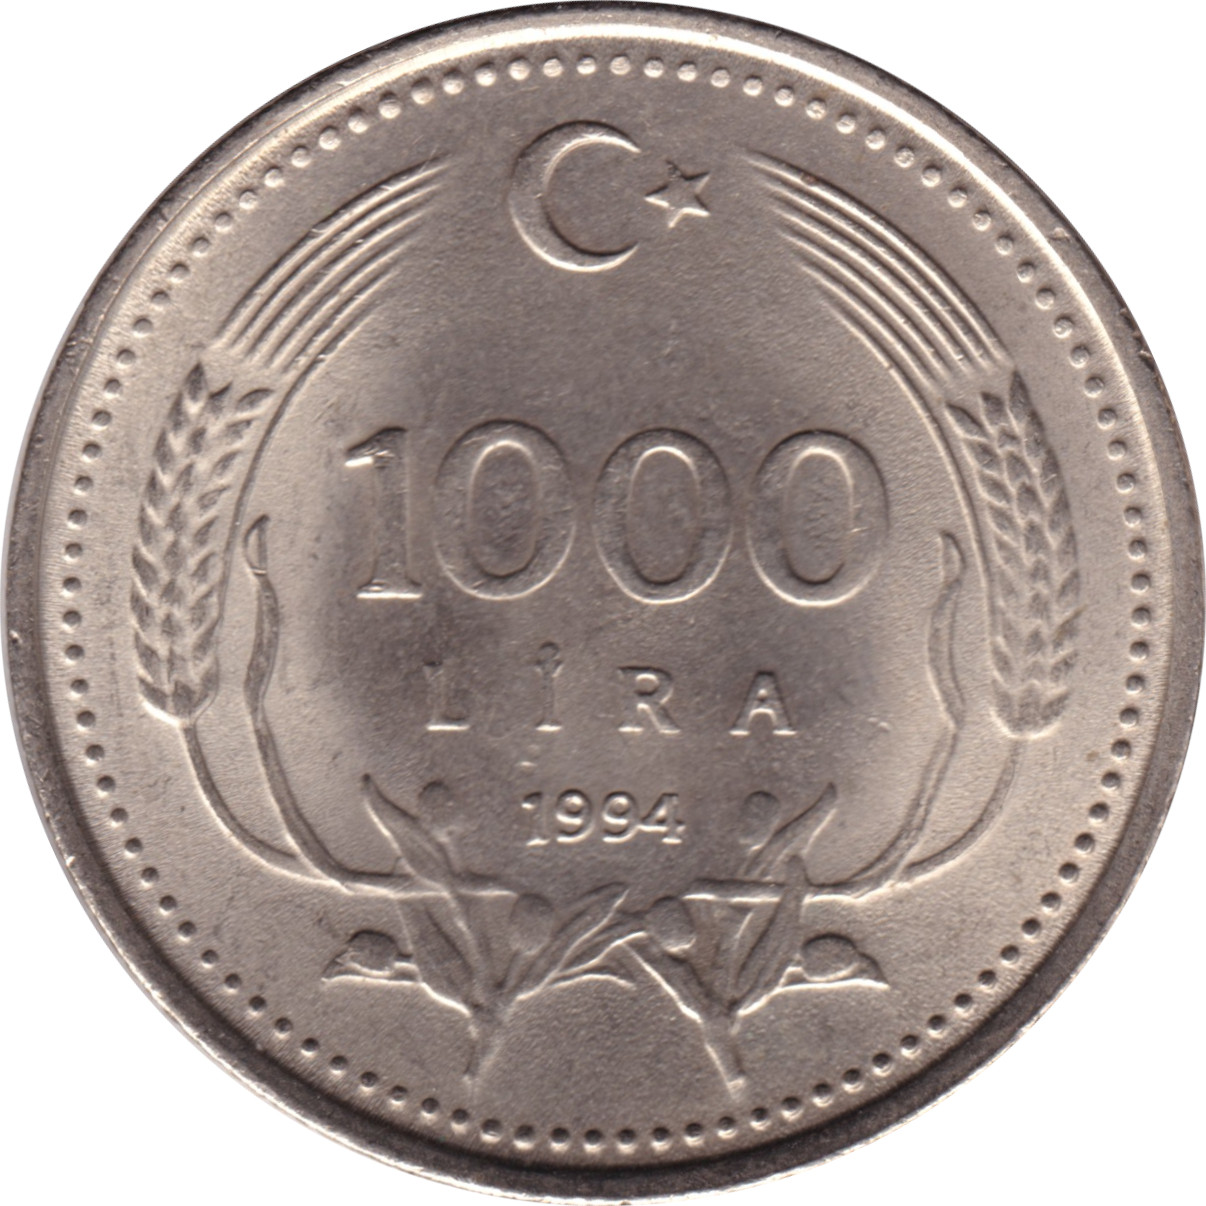 1000 lira - Moustafa Kemal • Type 1